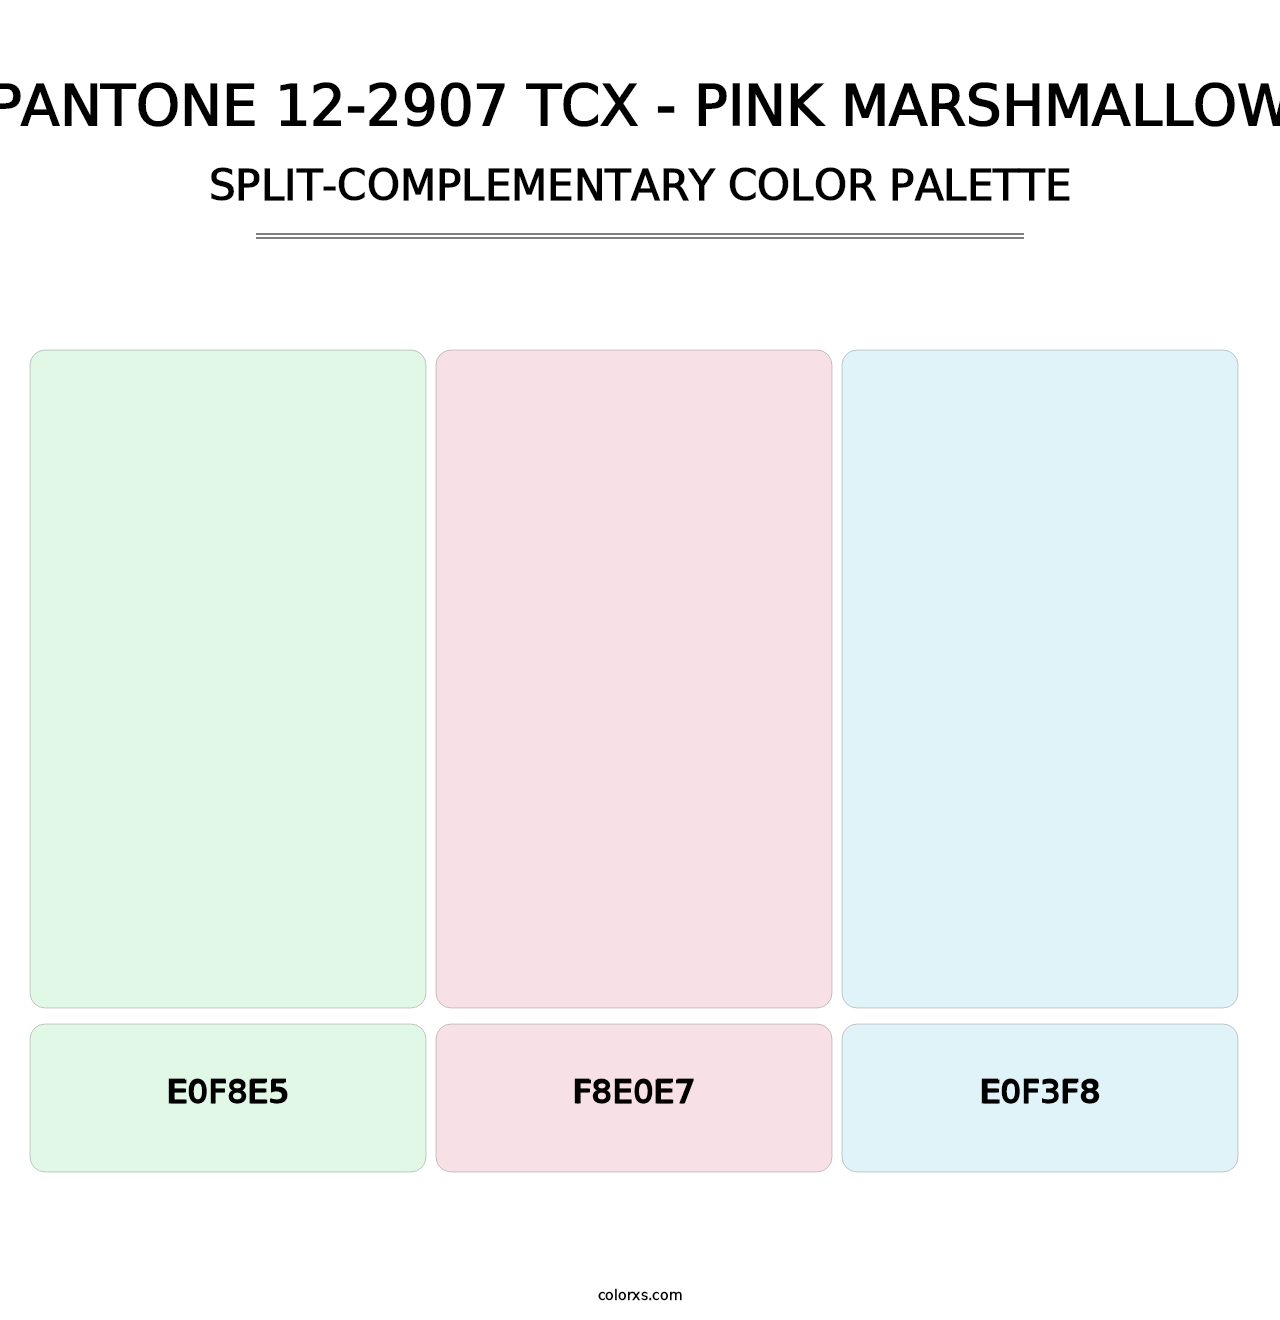 PANTONE 12-2907 TCX - Pink Marshmallow - Split-Complementary Color Palette